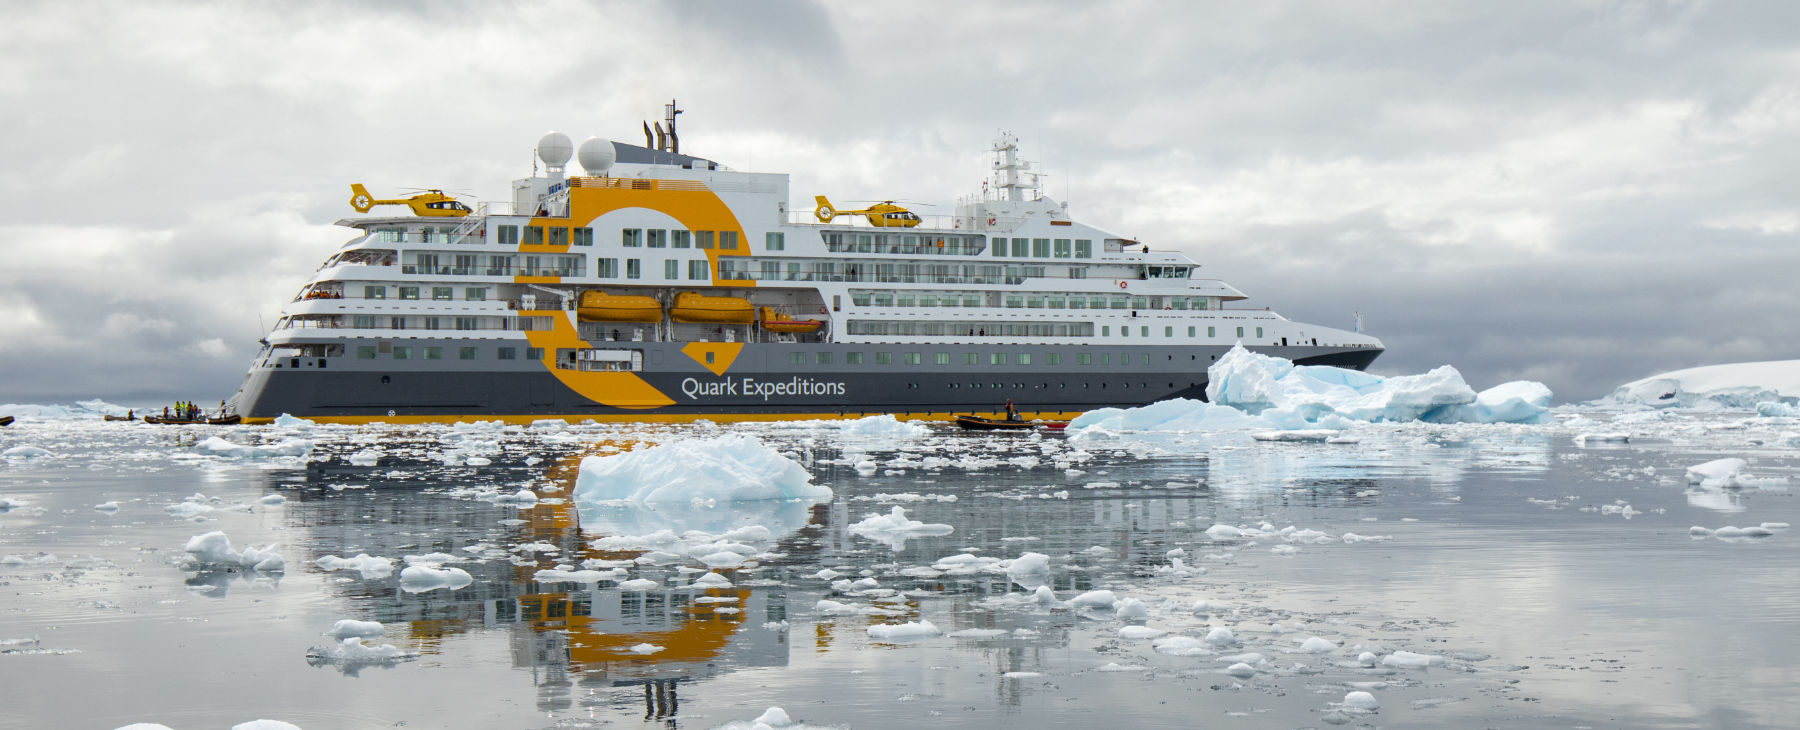 NEU Luxusschiff Expeditionsschiff Ultramarine Quark Expeditions Antarktis 3